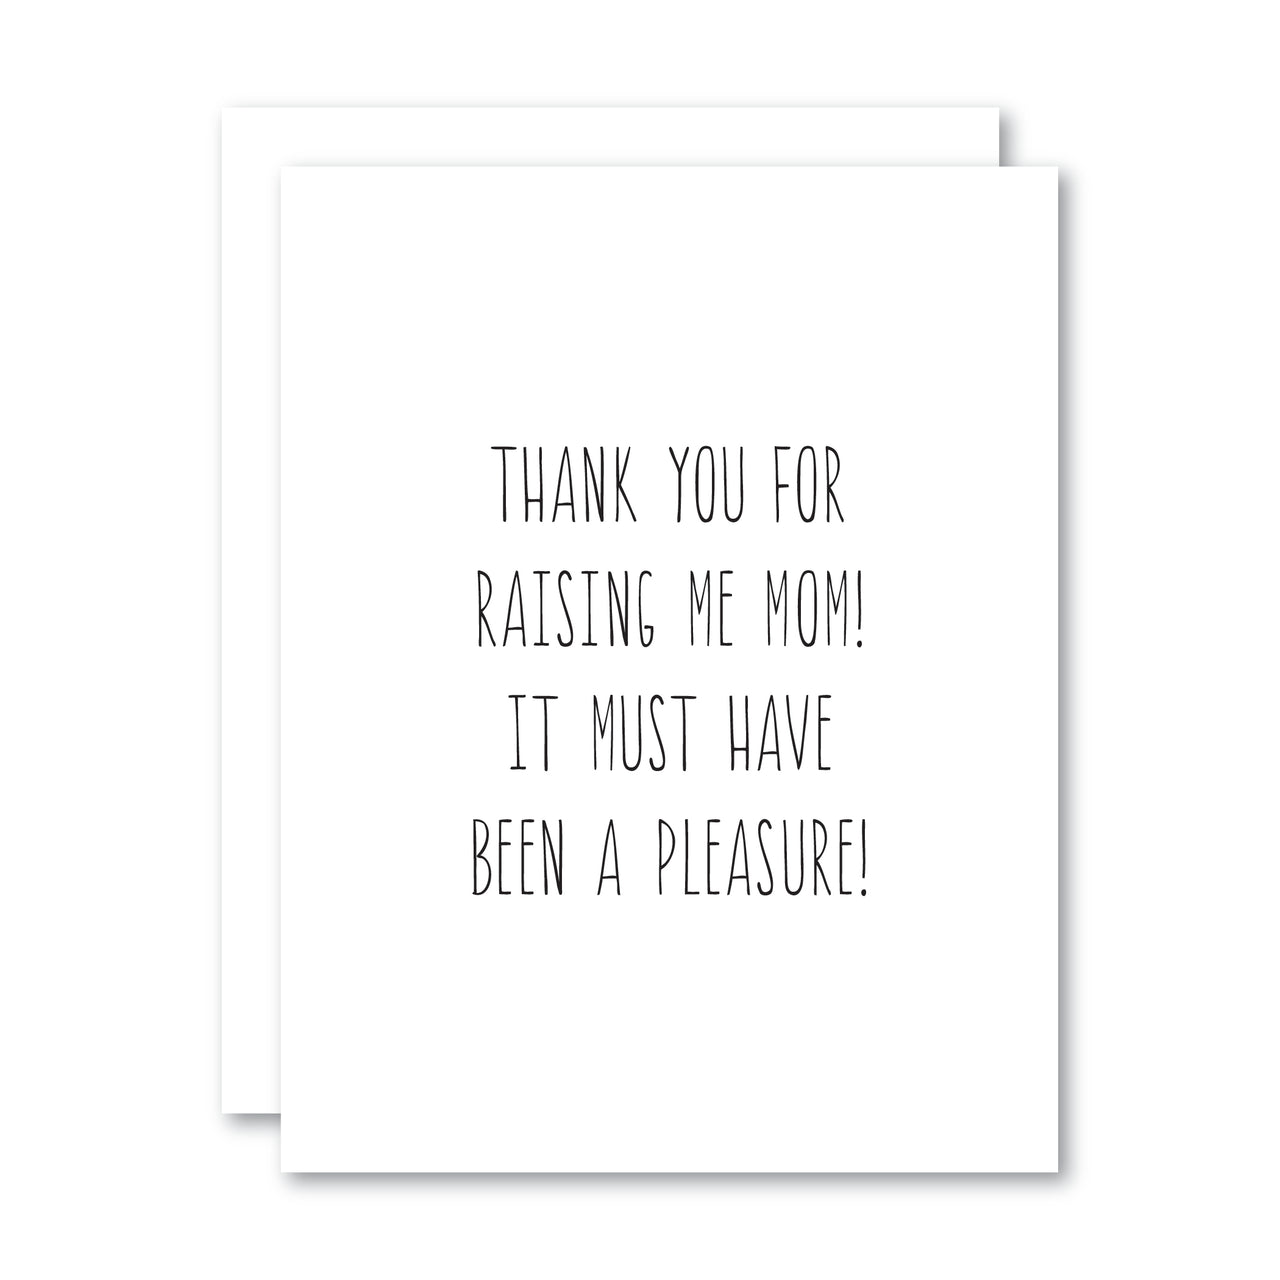 Thank you for Raising me Mom!